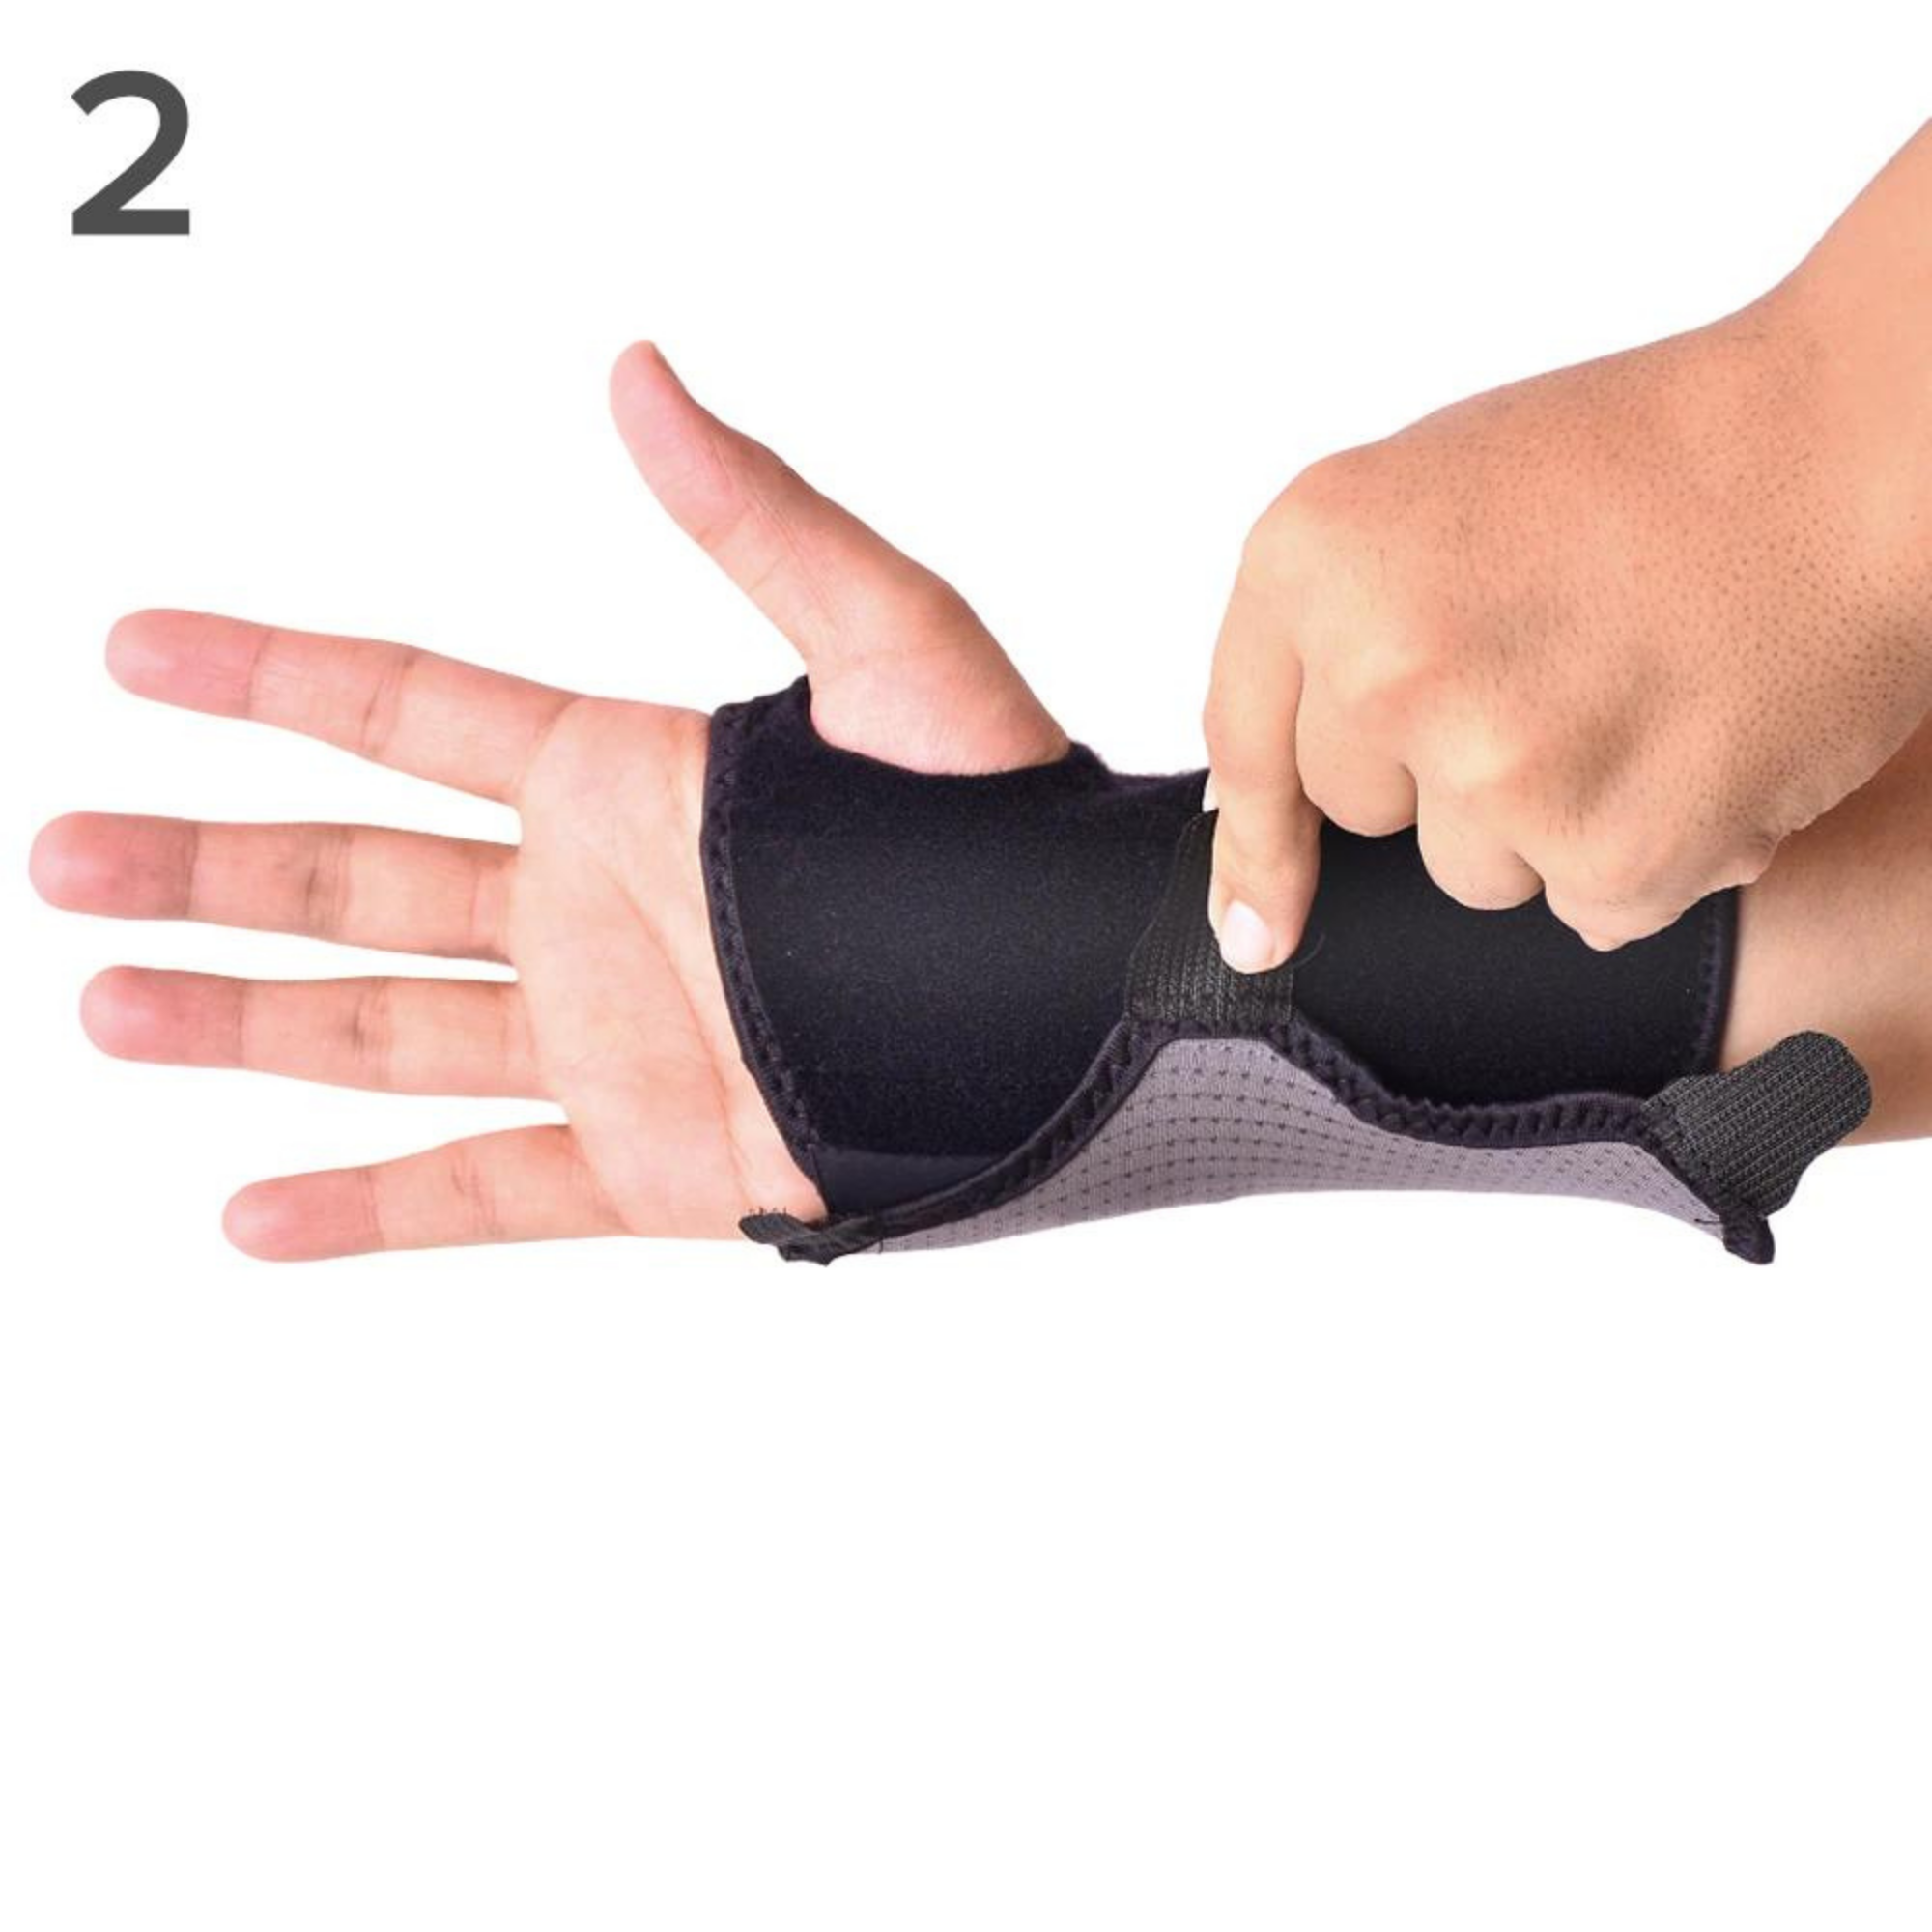 Futuro Comfort Stabilizing Wrist Brace 10770ENR Adjustable